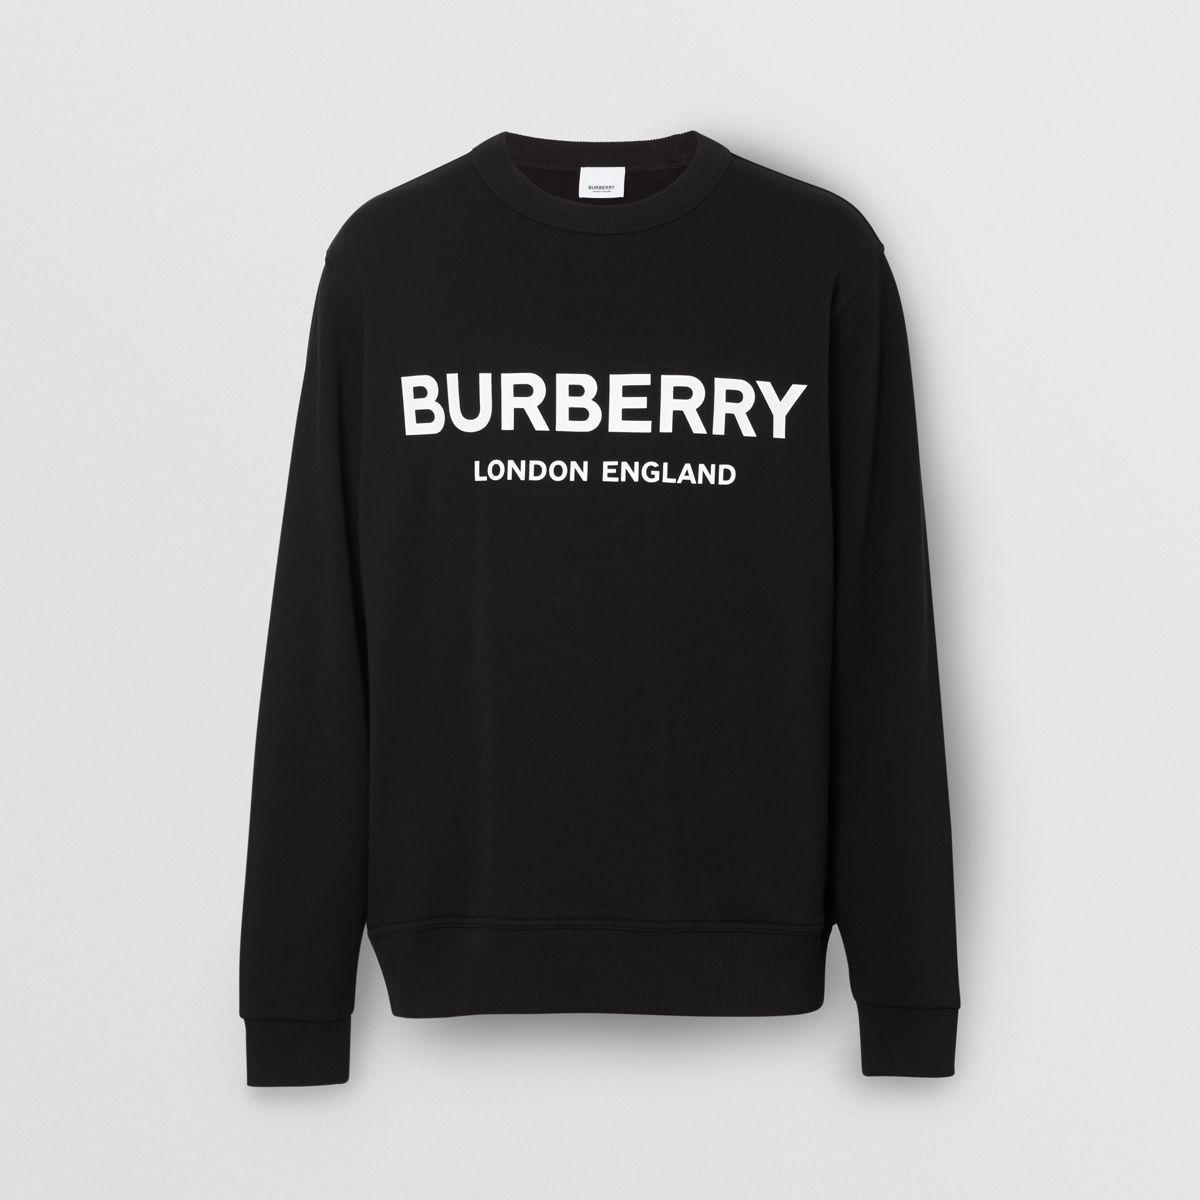 Burberry Logo Print Cotton Sweatshirt in Black for Men - Lyst